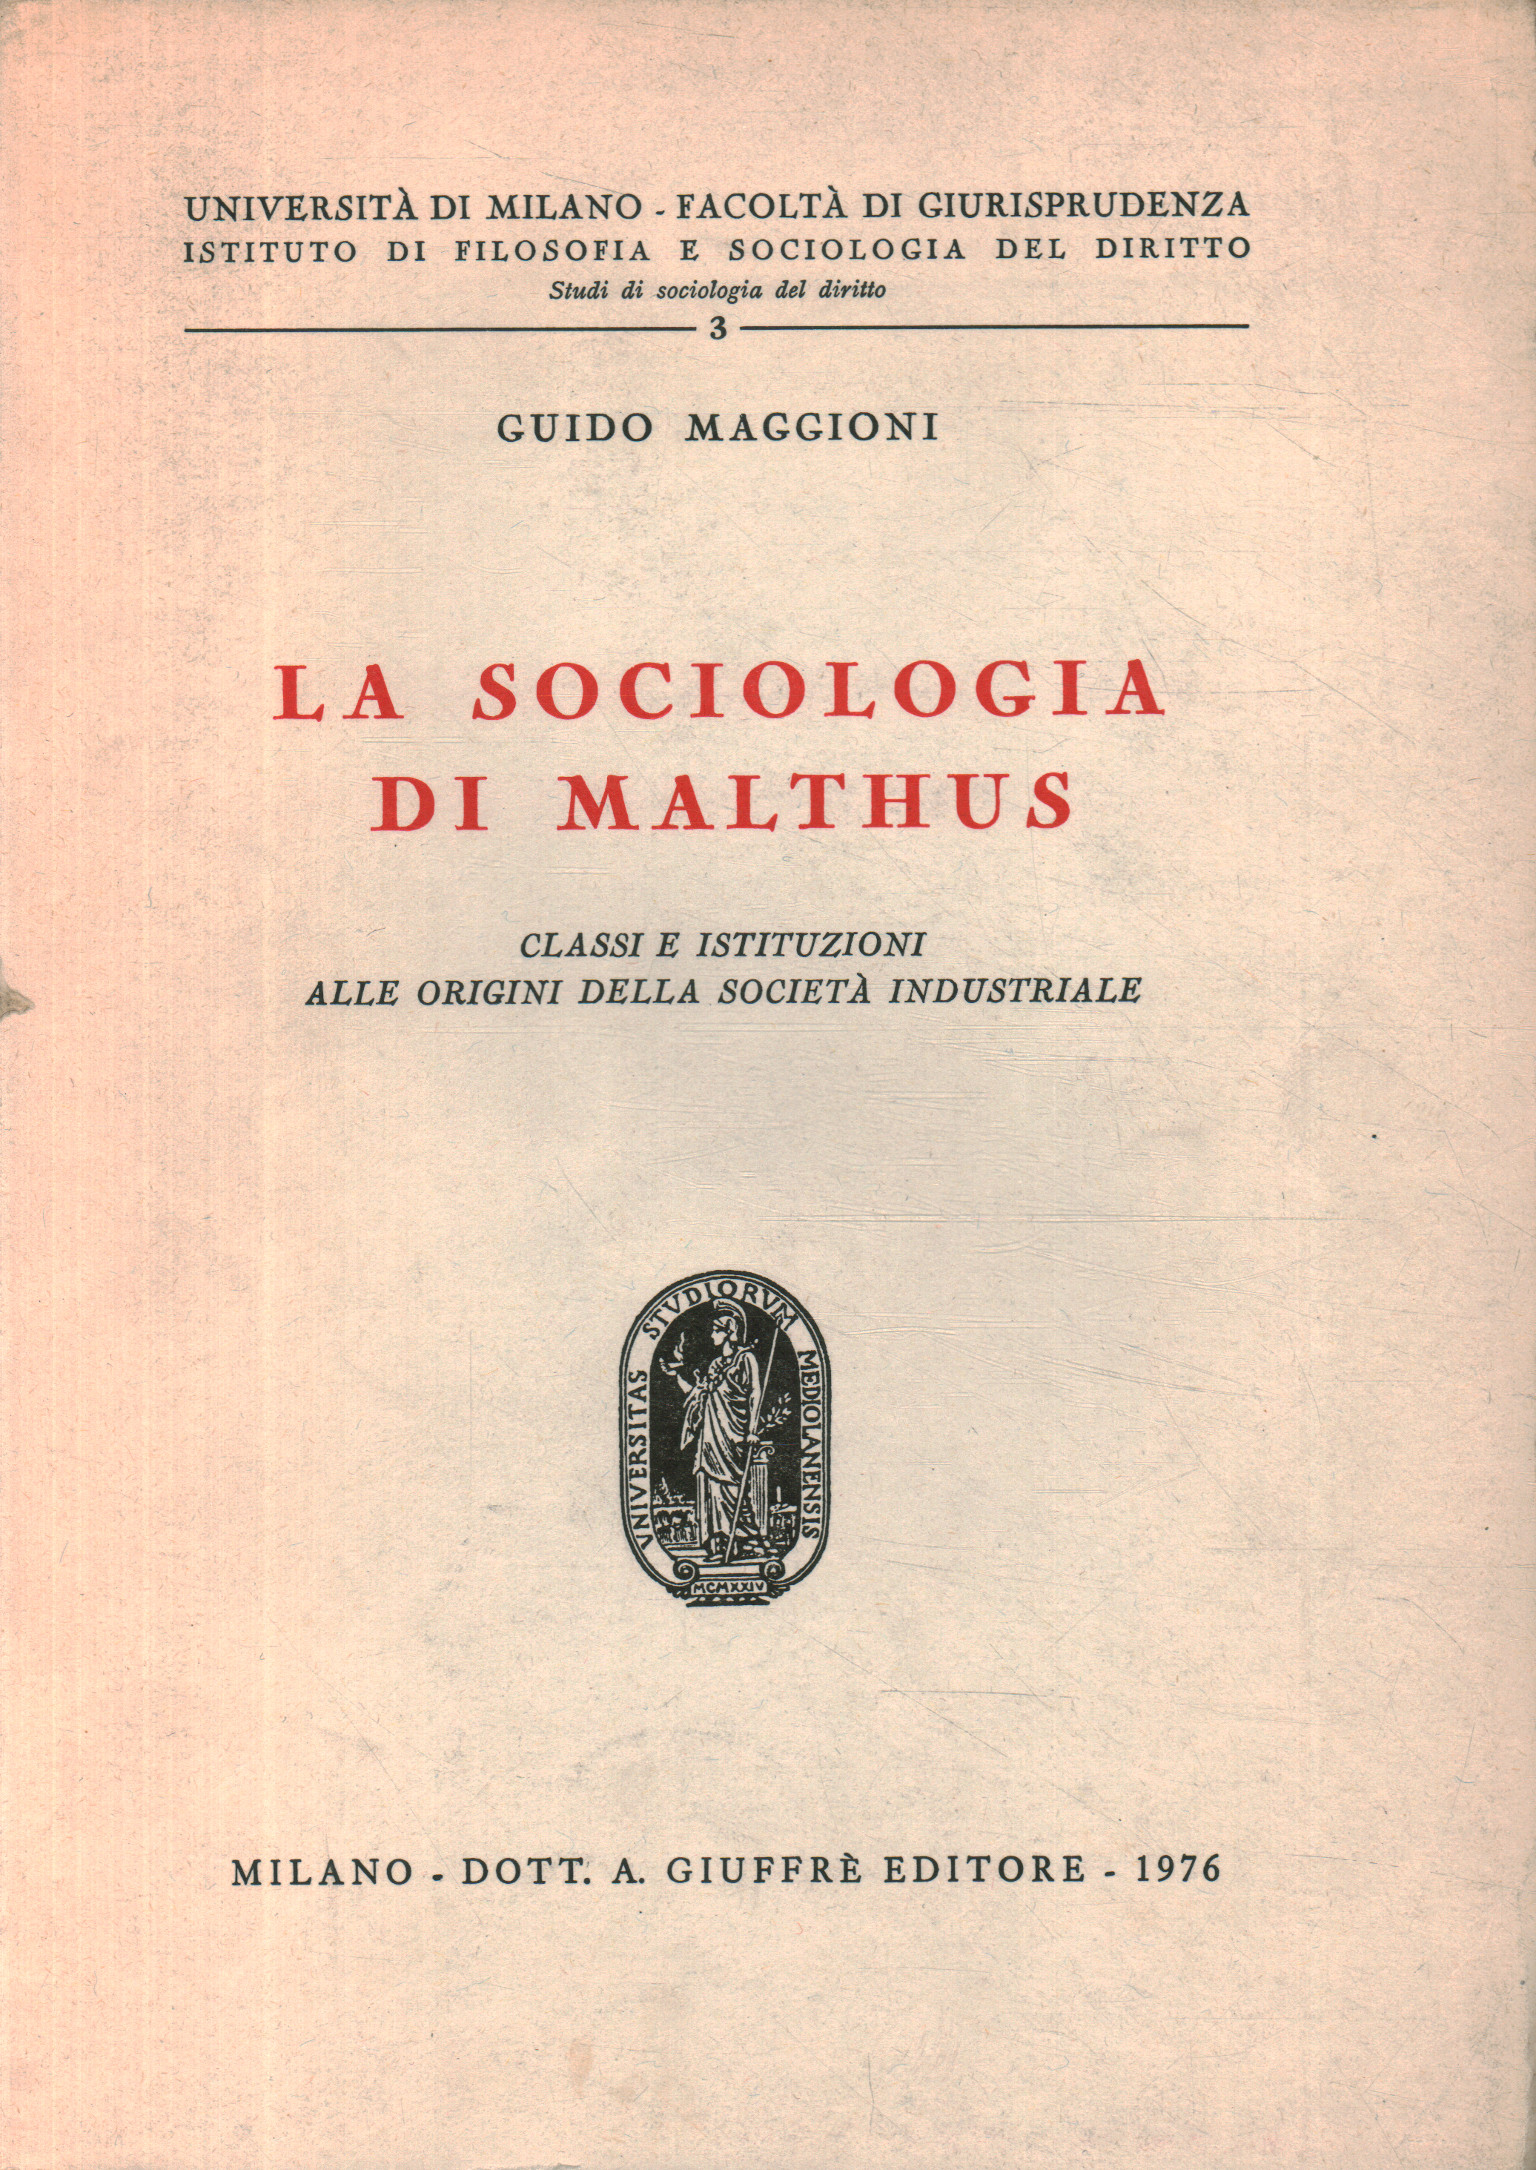 The sociology of Malthus